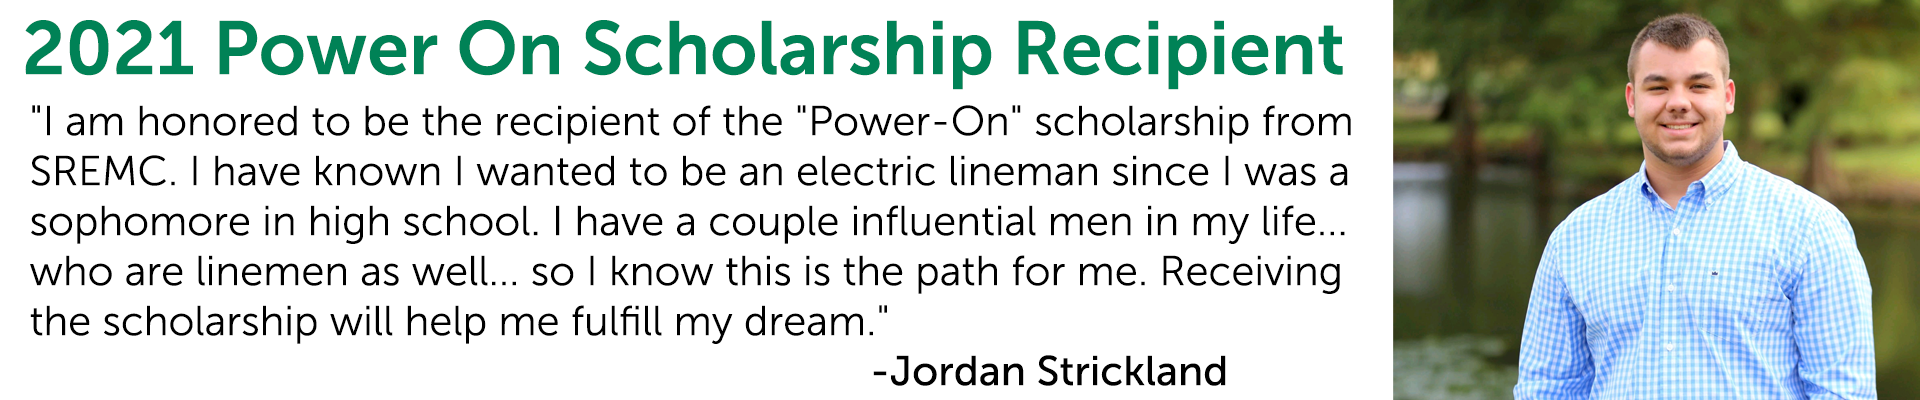 Power On Scholarship Recipient